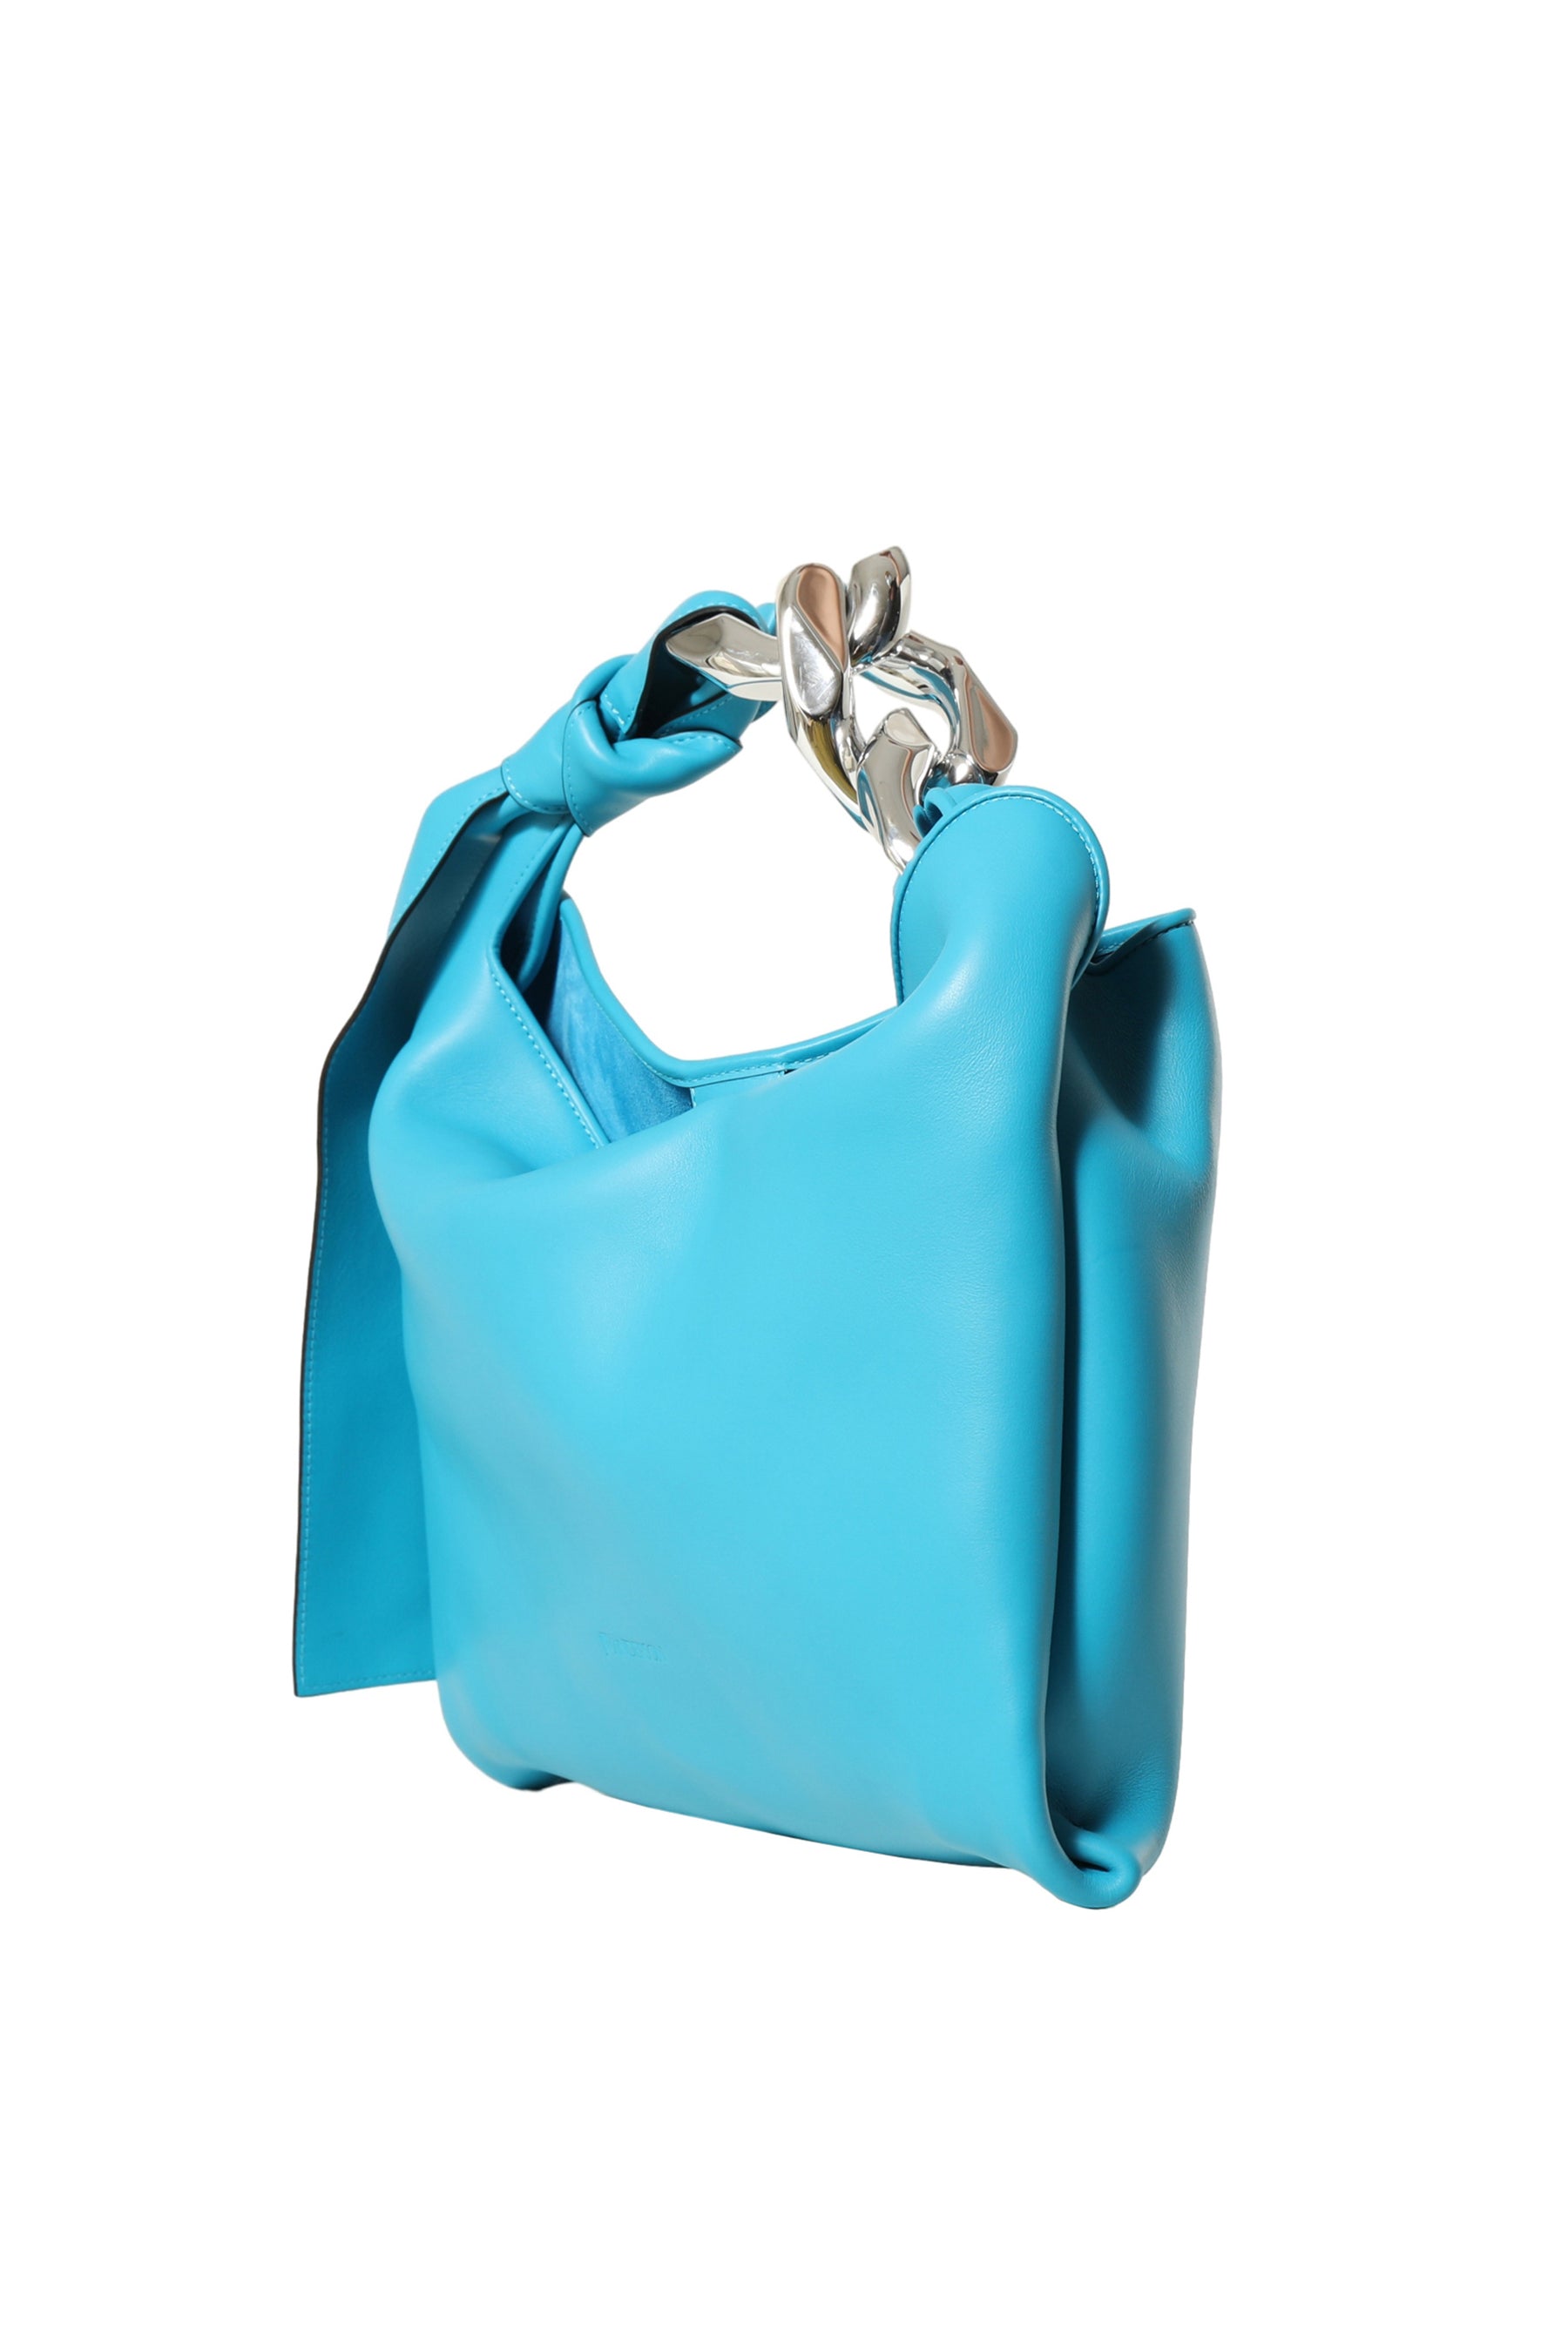 JW Anderson Small Chain Leather Hobo Bag, Turquoise, Women's, Handbags & Purses Hobo Bags